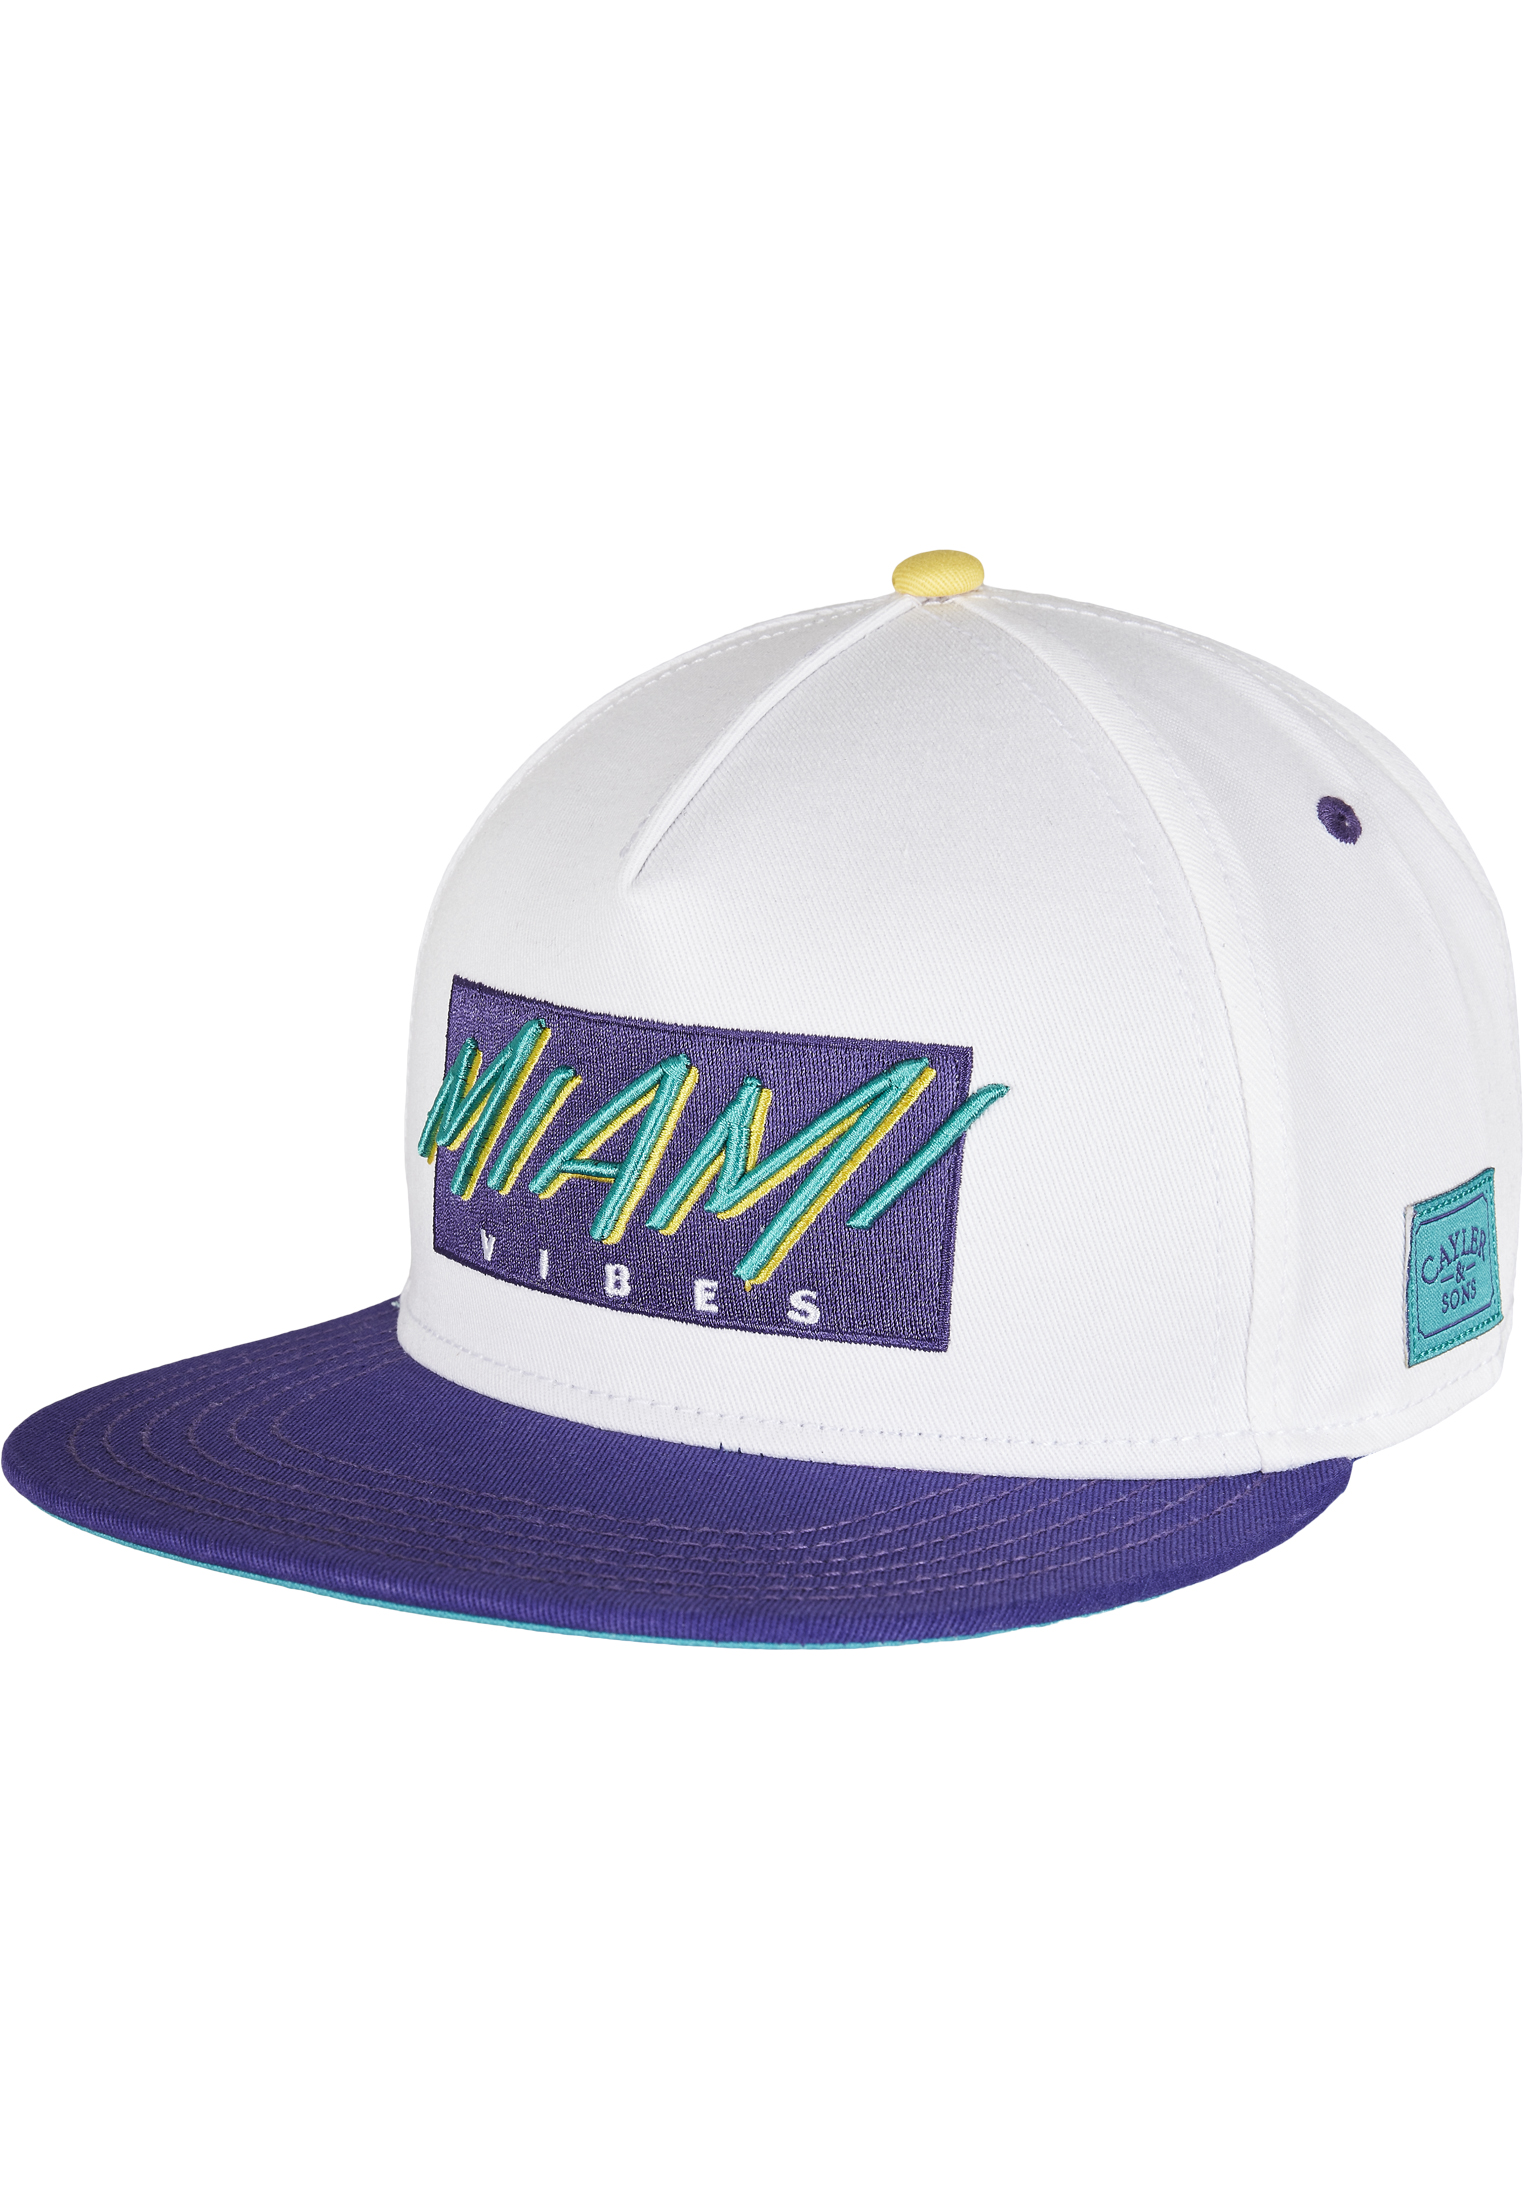 Caps C&S WL Miami Vibes Snapback in Farbe black/mc